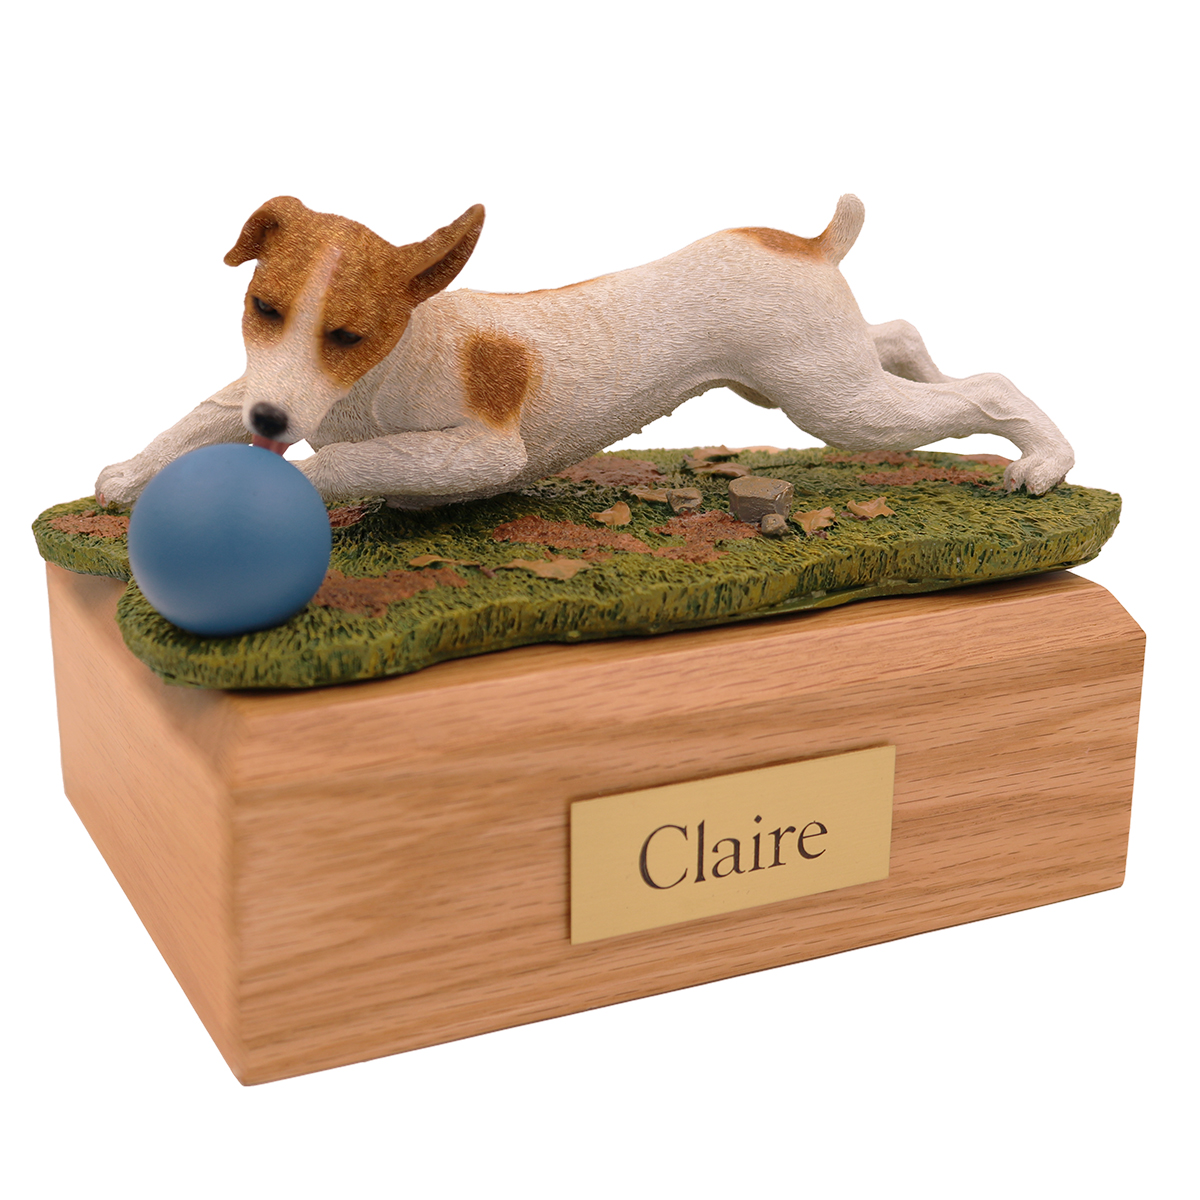 Dog, Jack Russell Terrier, Brn/White w/Ball - Figurine Urn